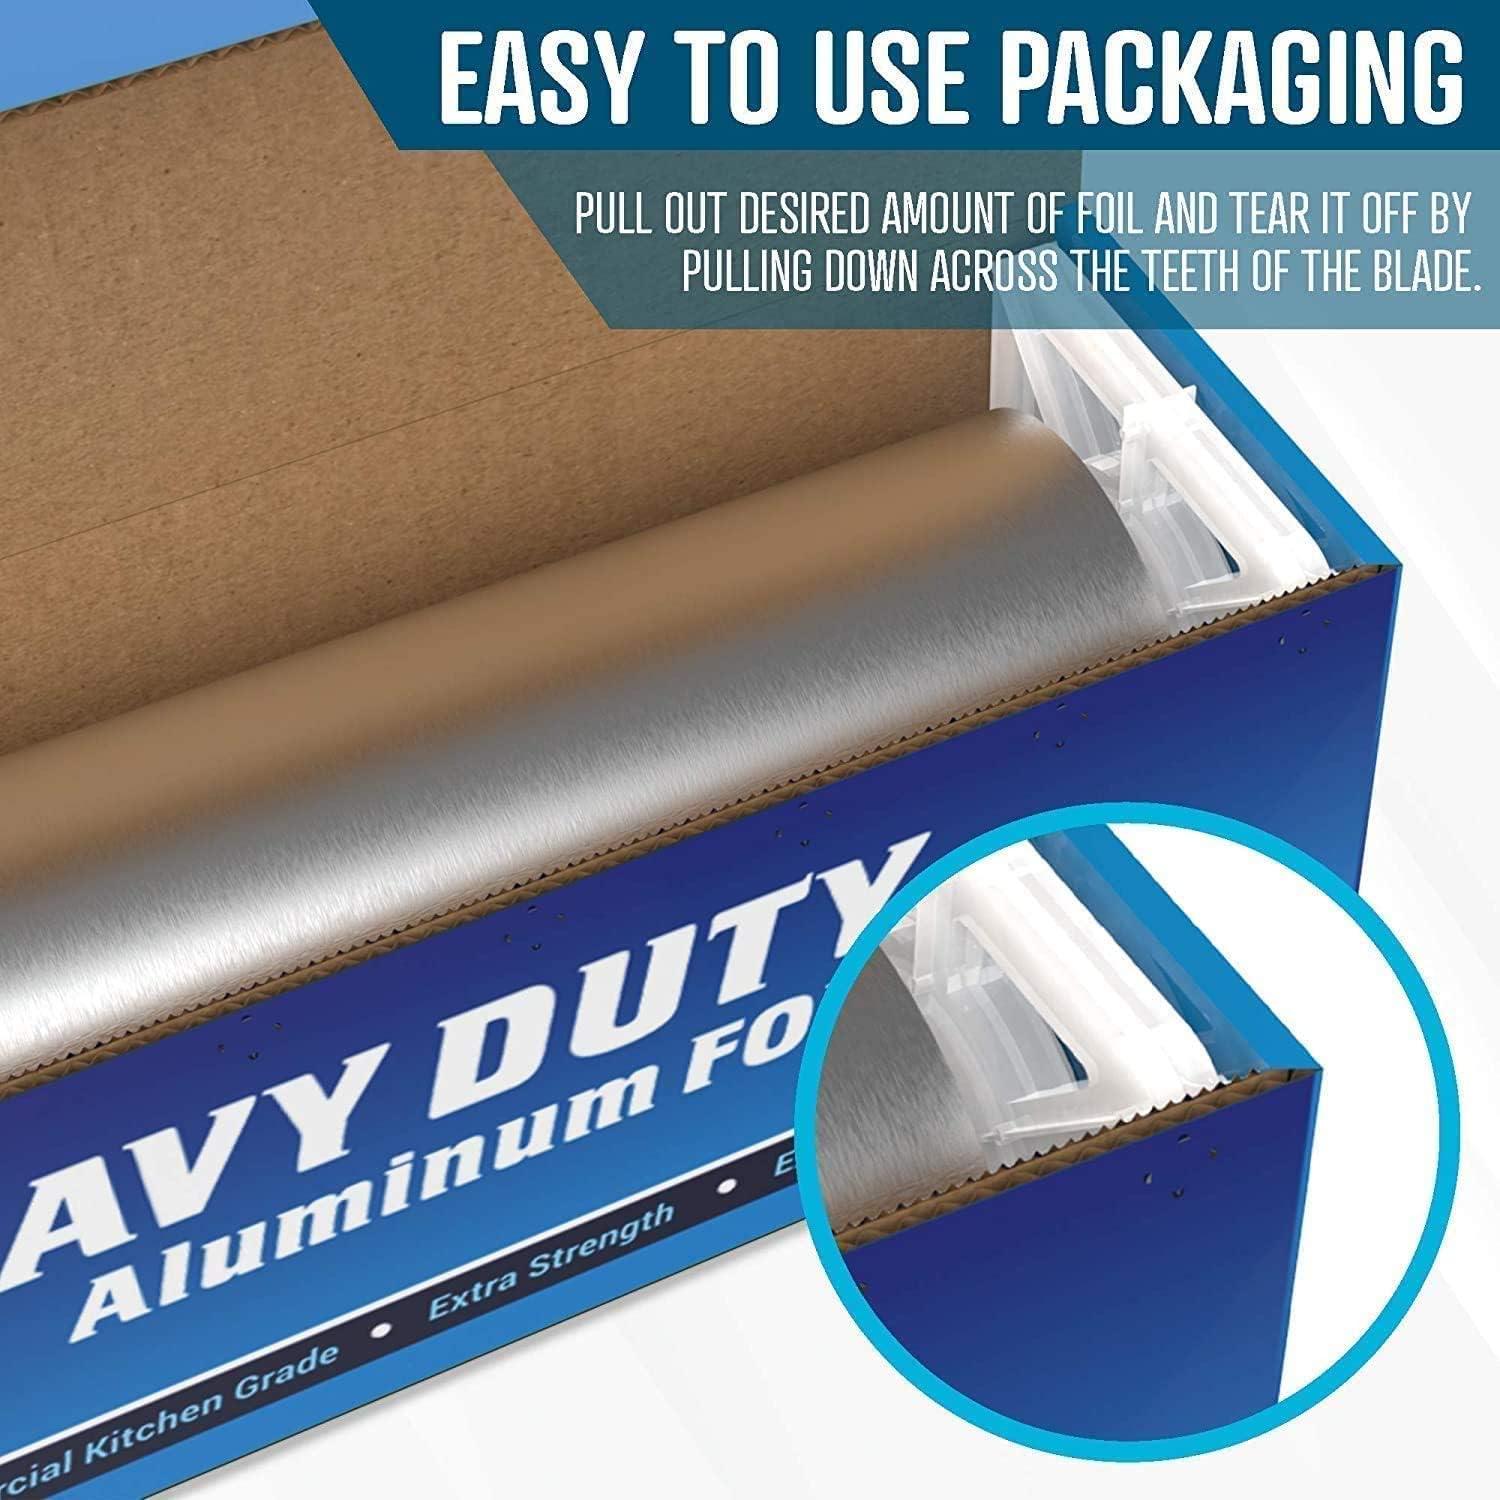 Aluminum Foil Rolls Heavy Duty and Extra Heavy Duty Rolls